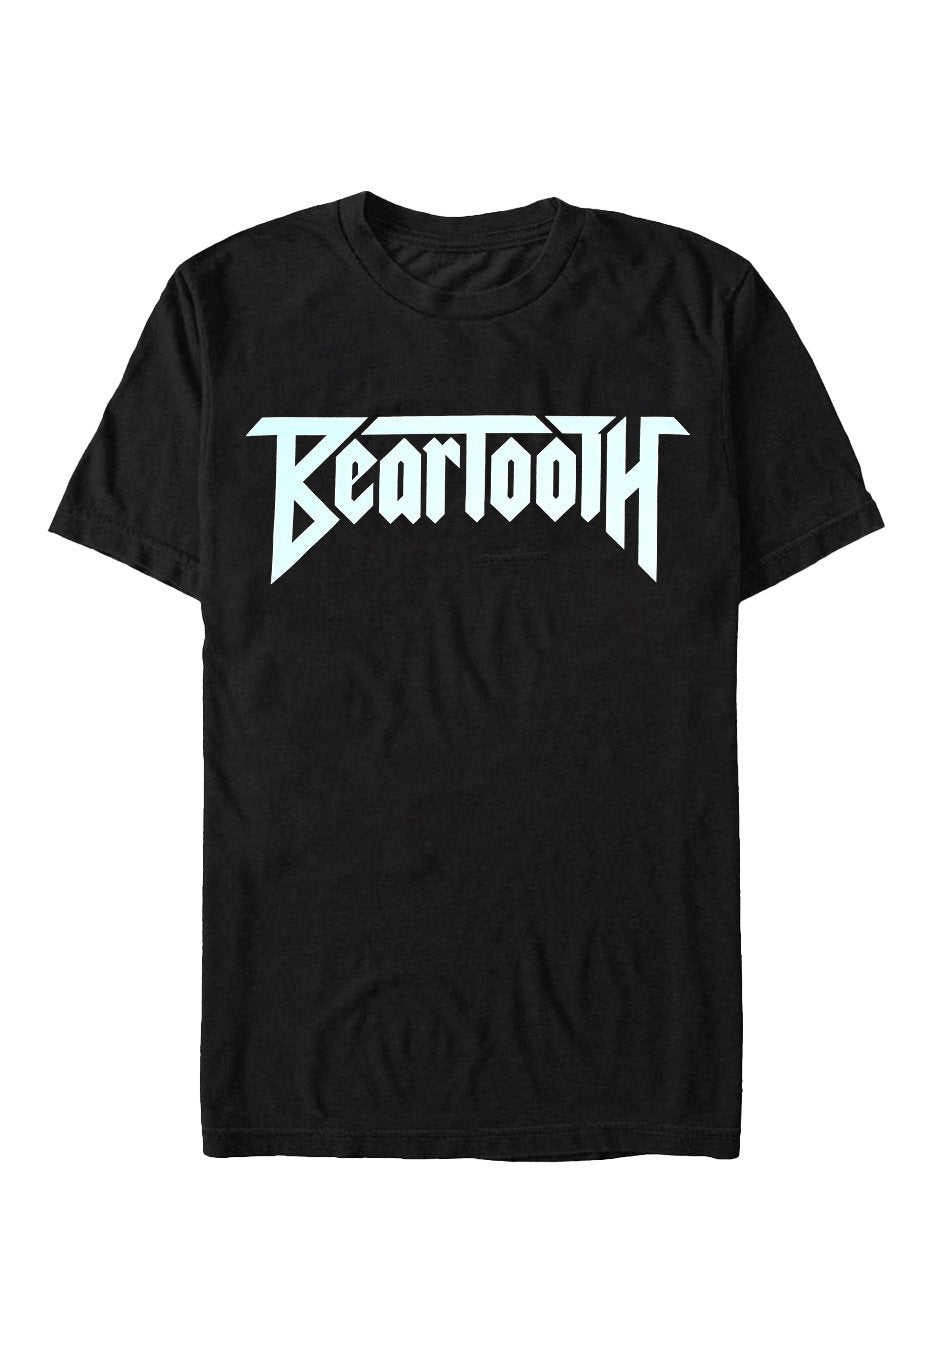 Beartooth - Teal Snake On My Back - T-Shirt